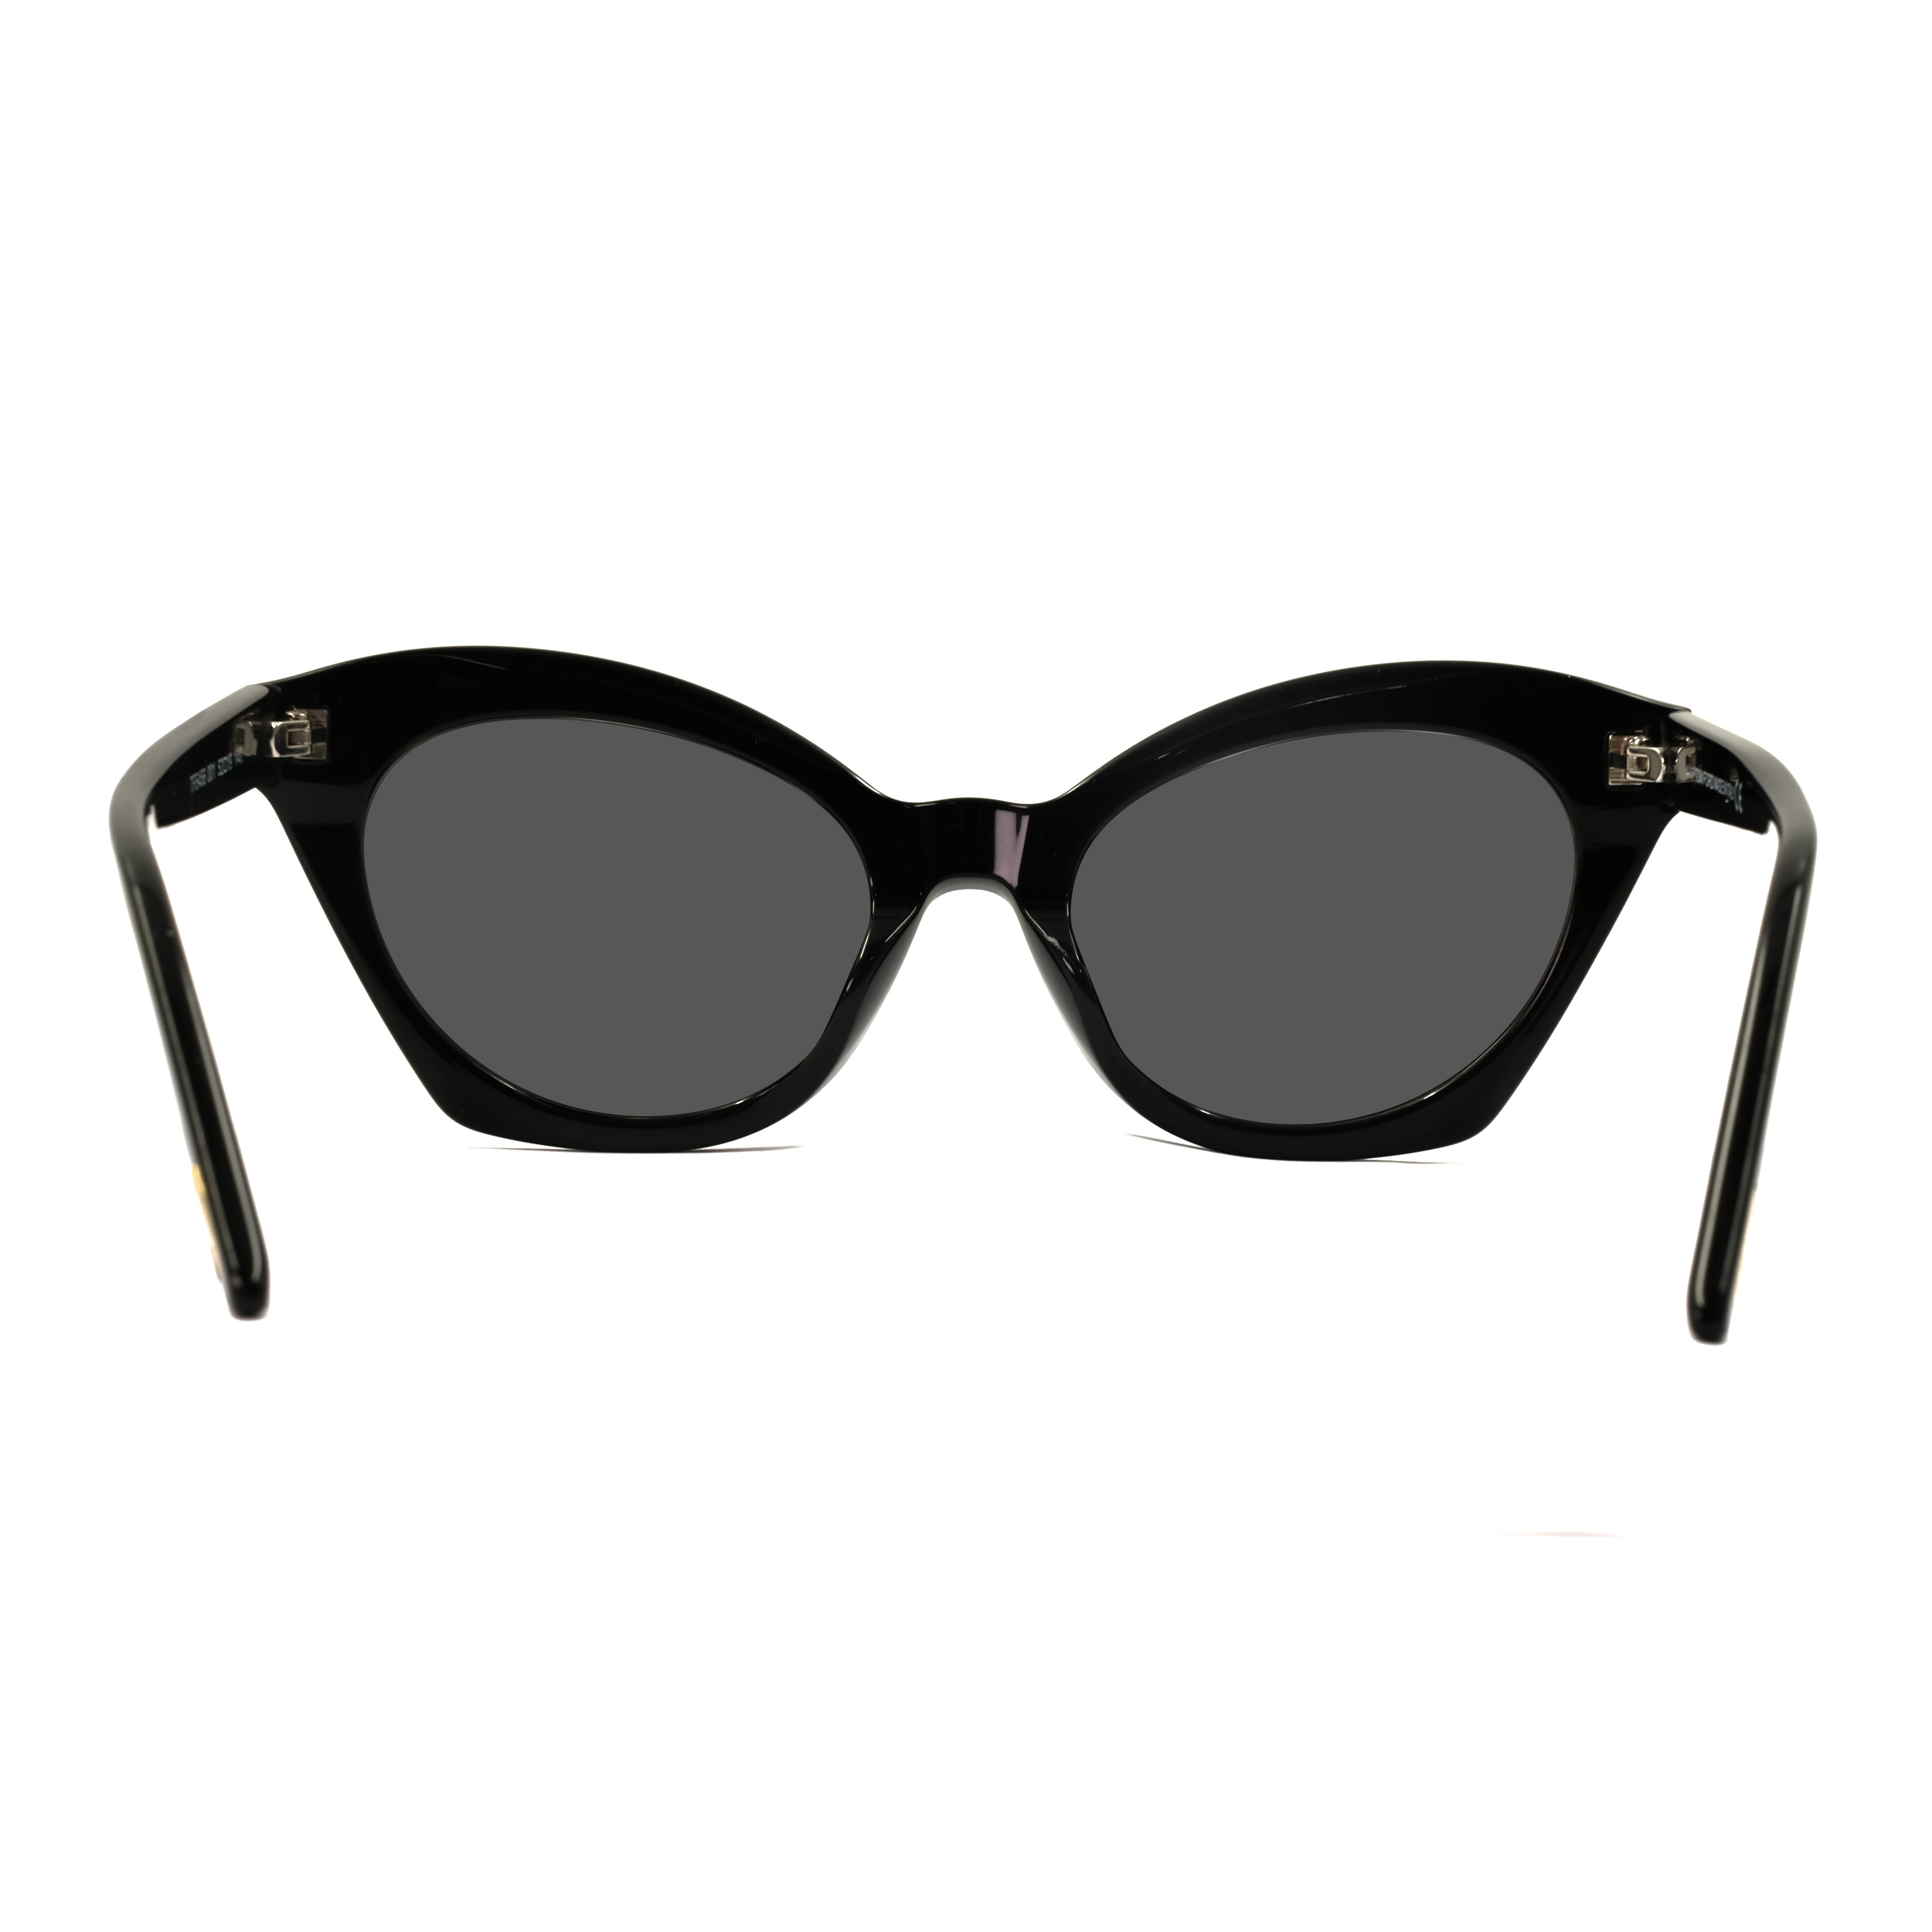 Sunglasses Factory Black Acetate Sunglasses Cat Eye Sunglasses Manufacturers